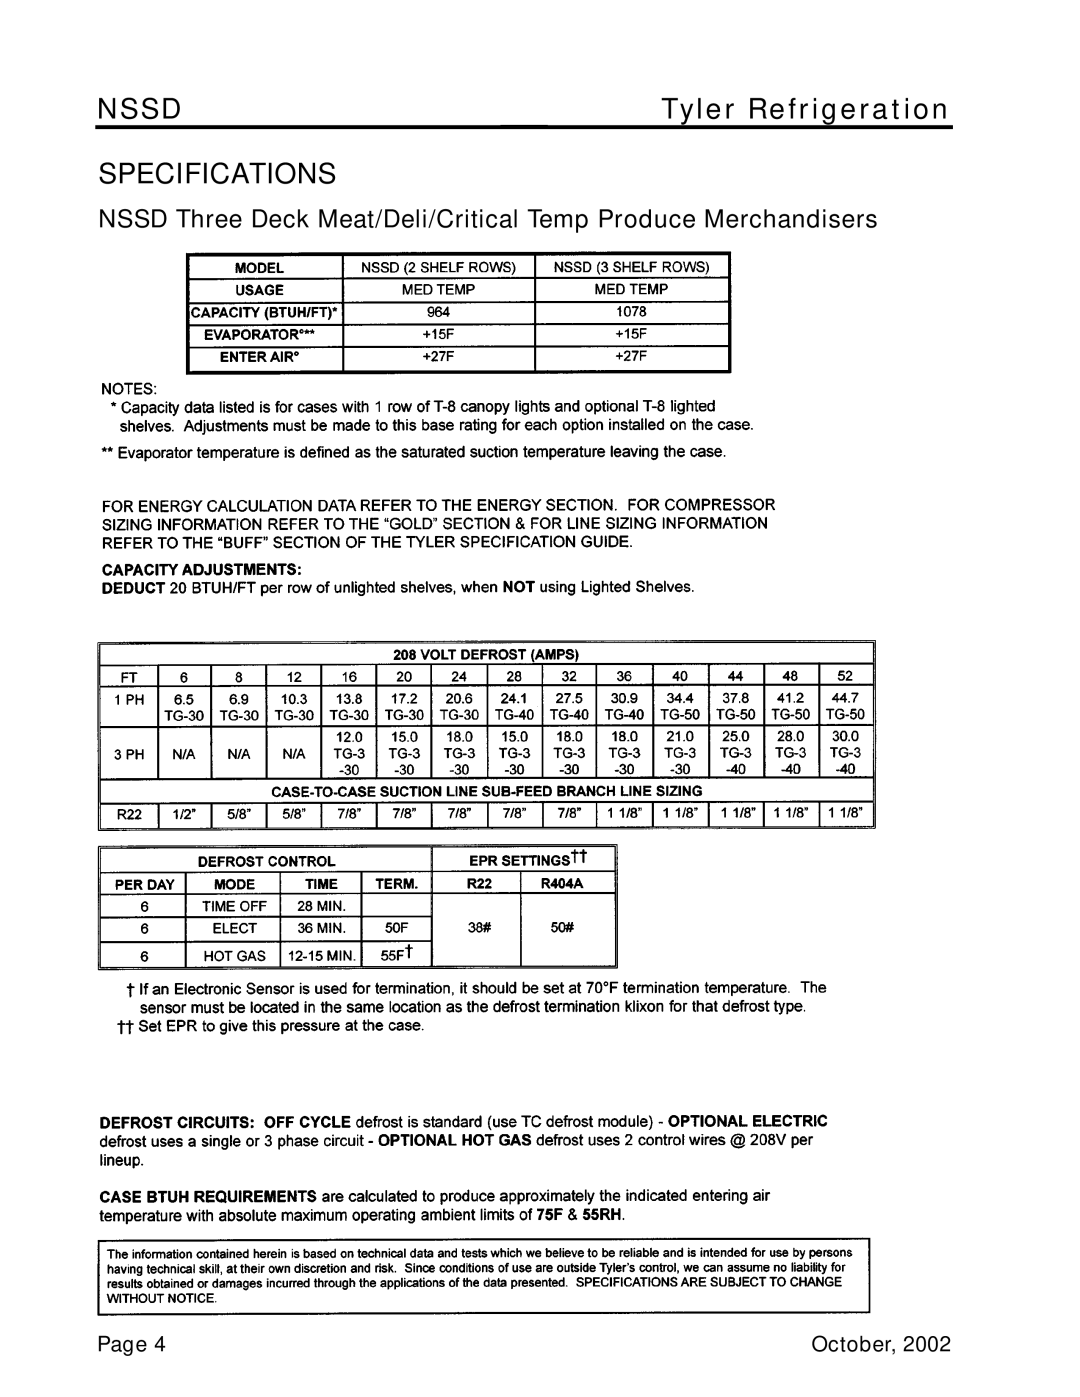 Tyler Refrigeration NSSD service manual Specifications, Nssd, Tyler Refrigeration, Page, October 